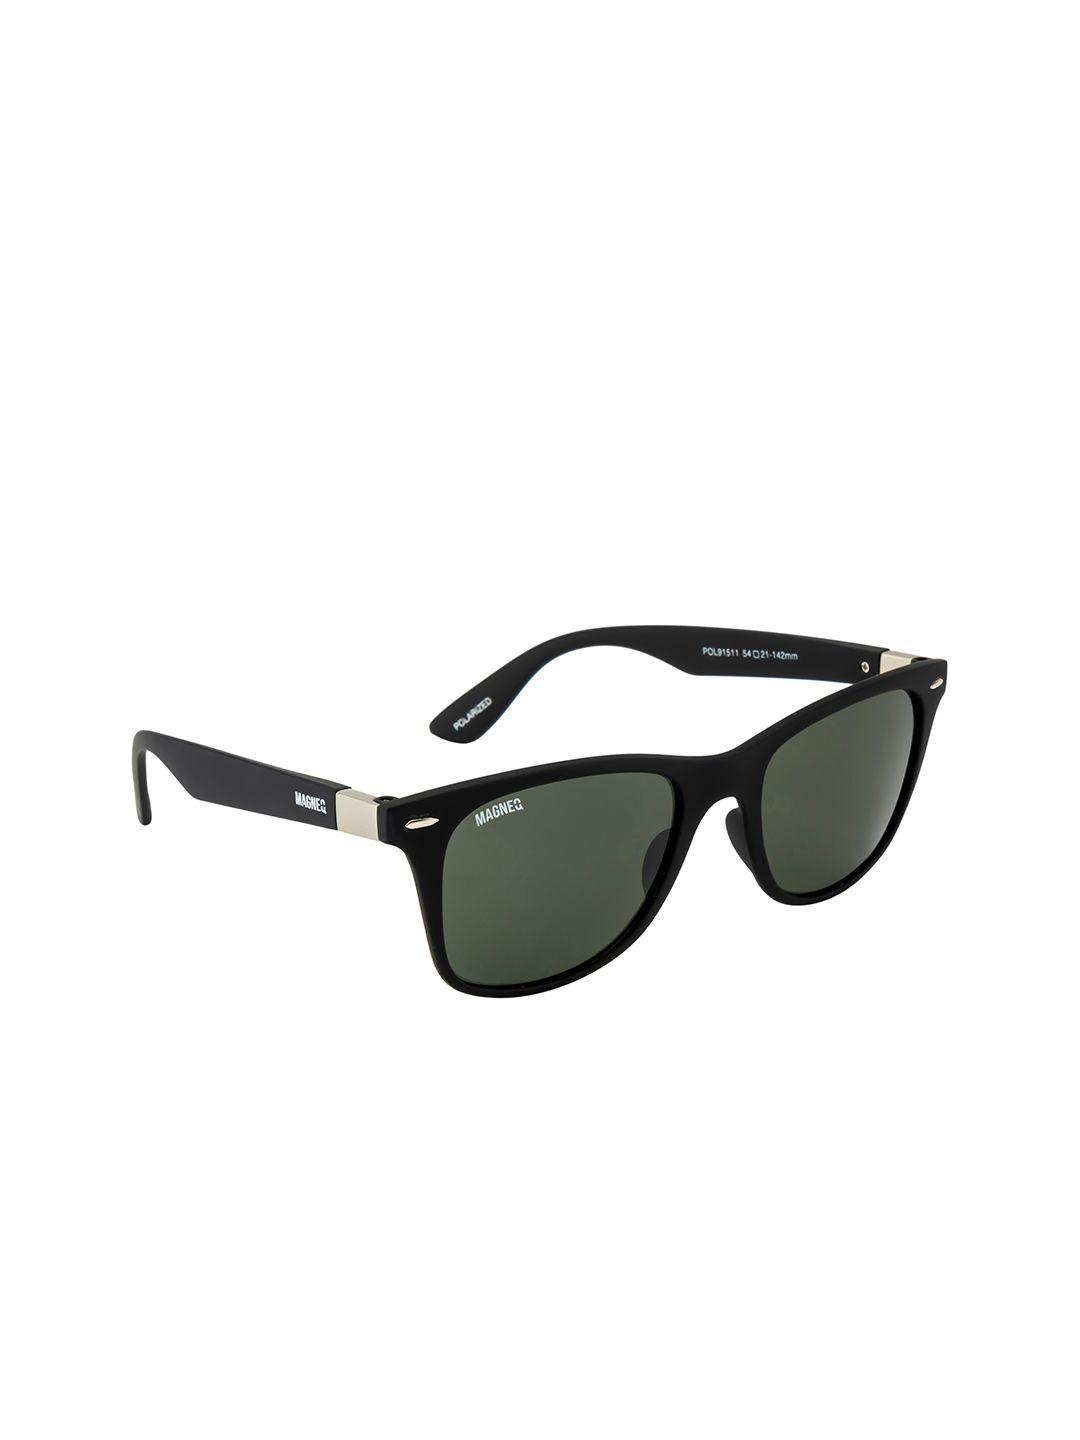 magneq lens & wayfarer sunglasses with polarised & uv protected lens mg 91511/s p1 5421